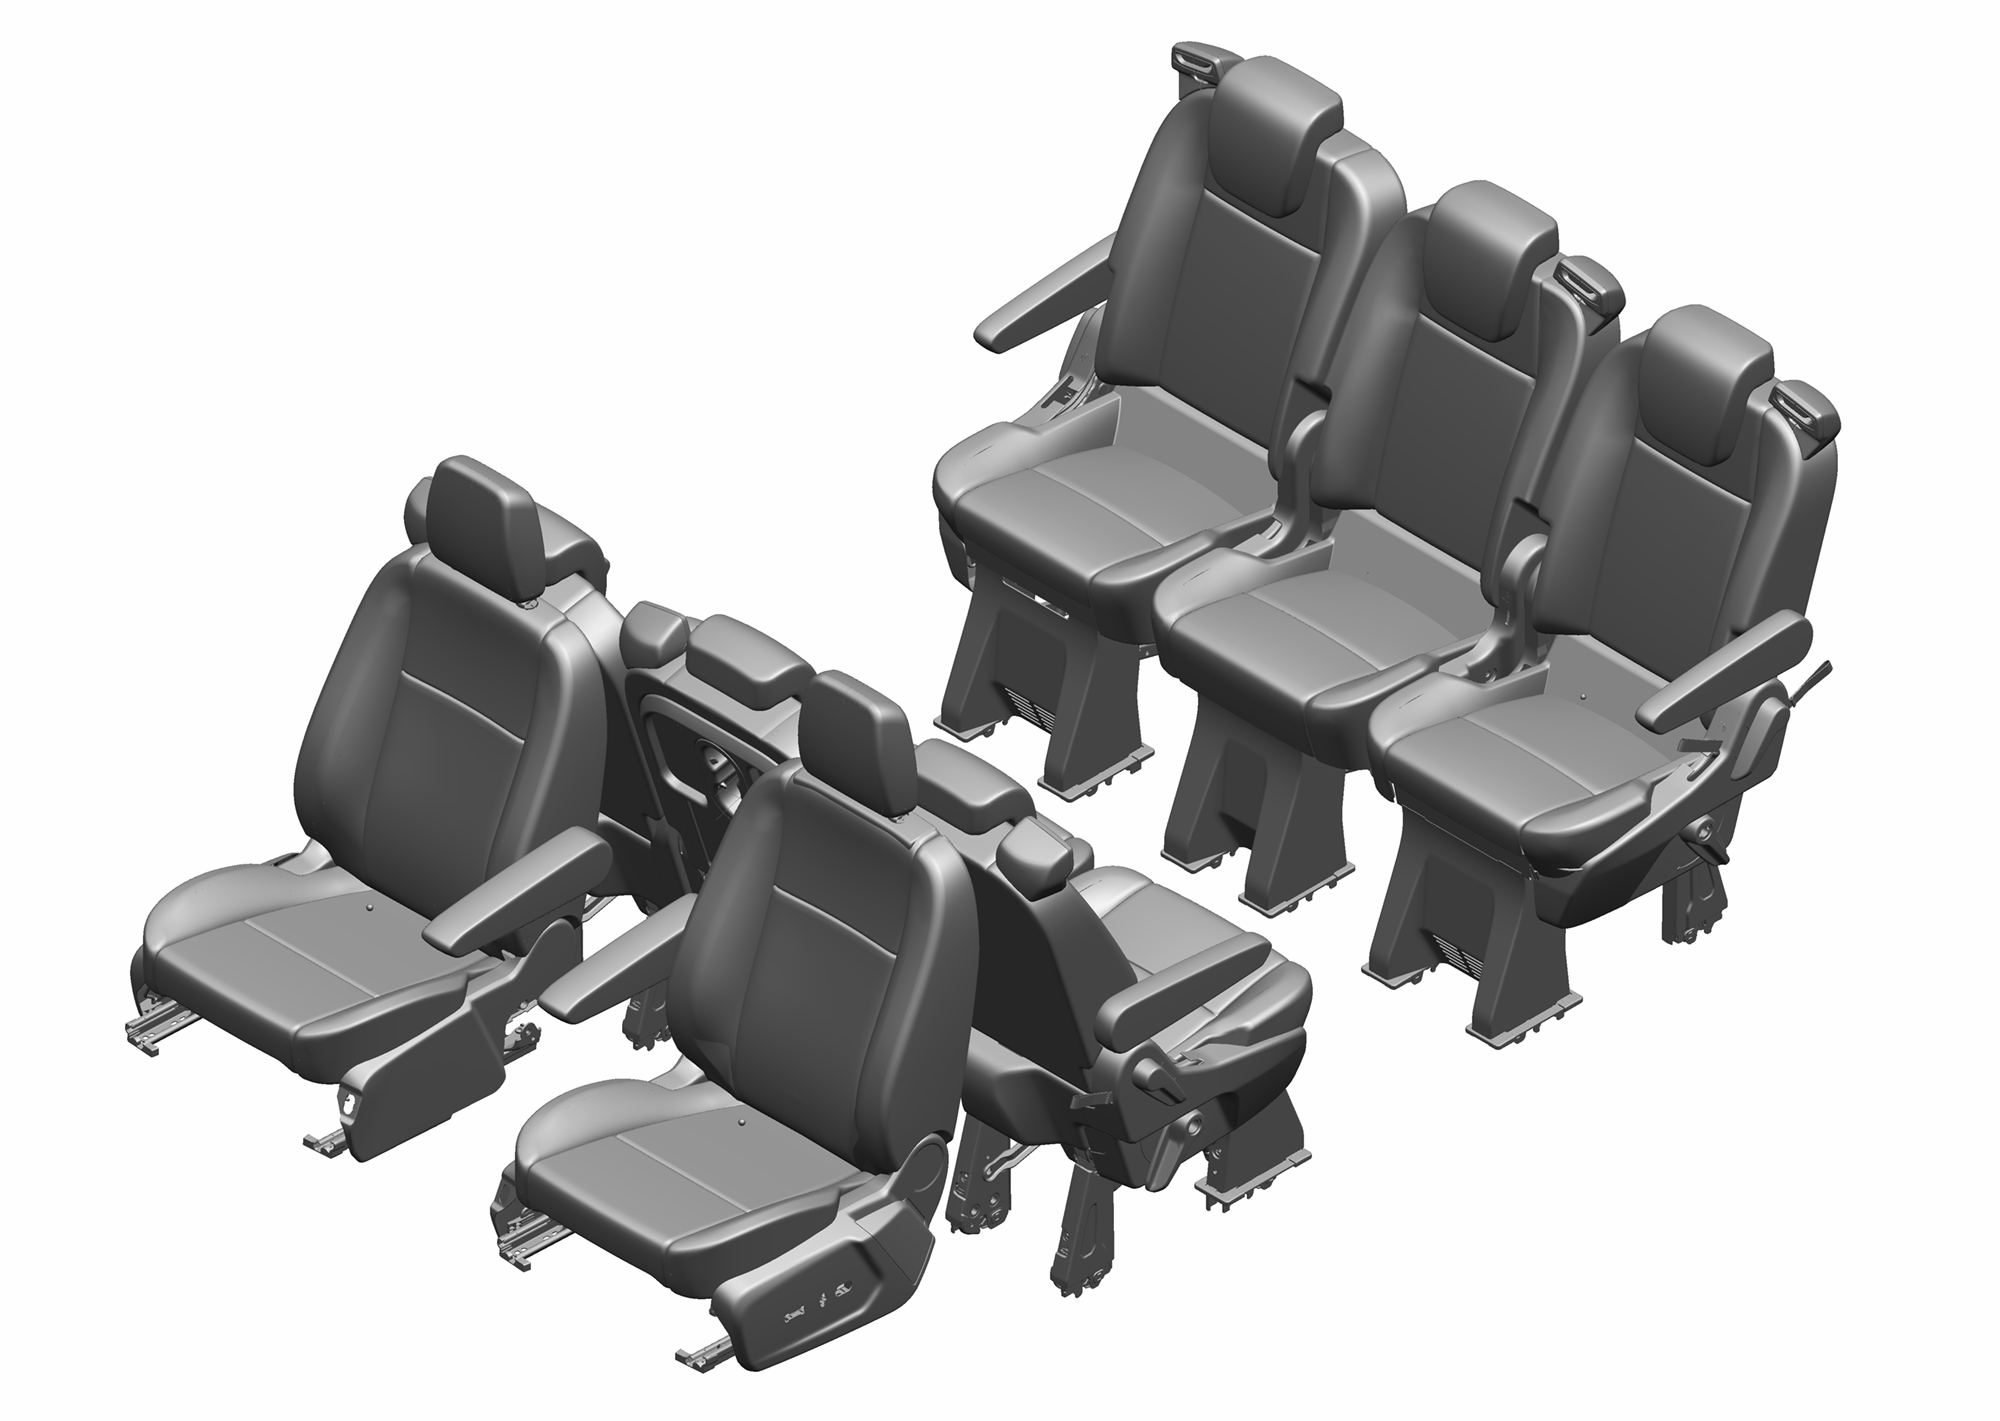 2017 Ford TourneoCustom SeatsAnimation